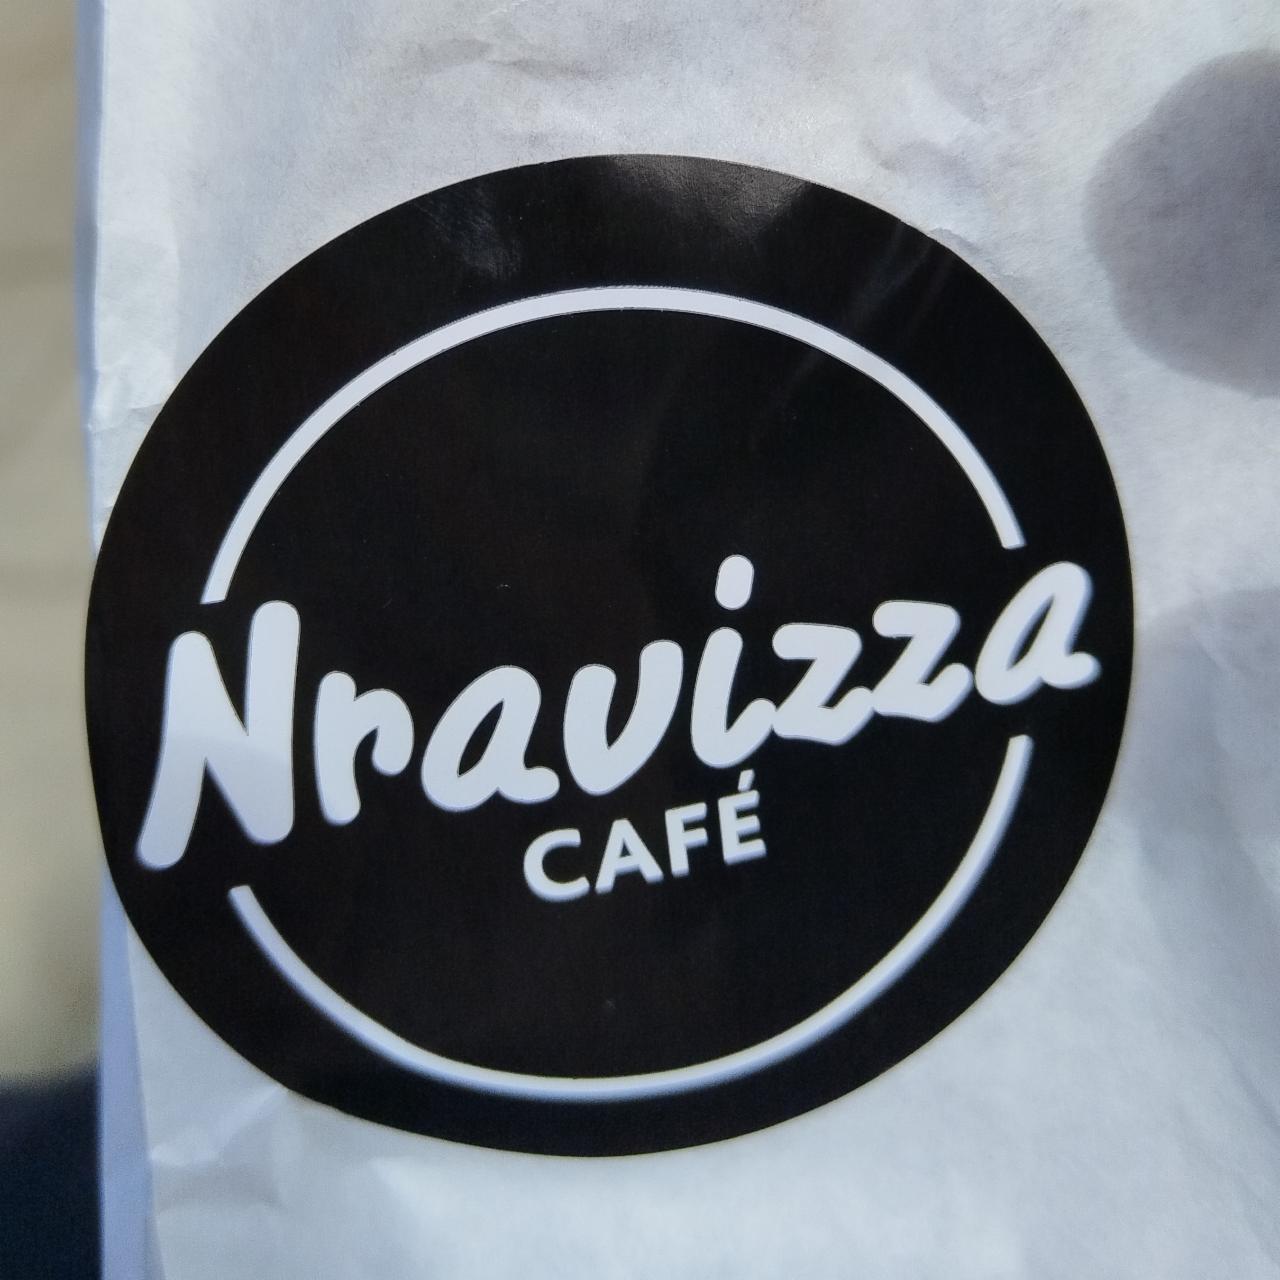 Фото - Шаурма с курицей жареной Nravizza cafe